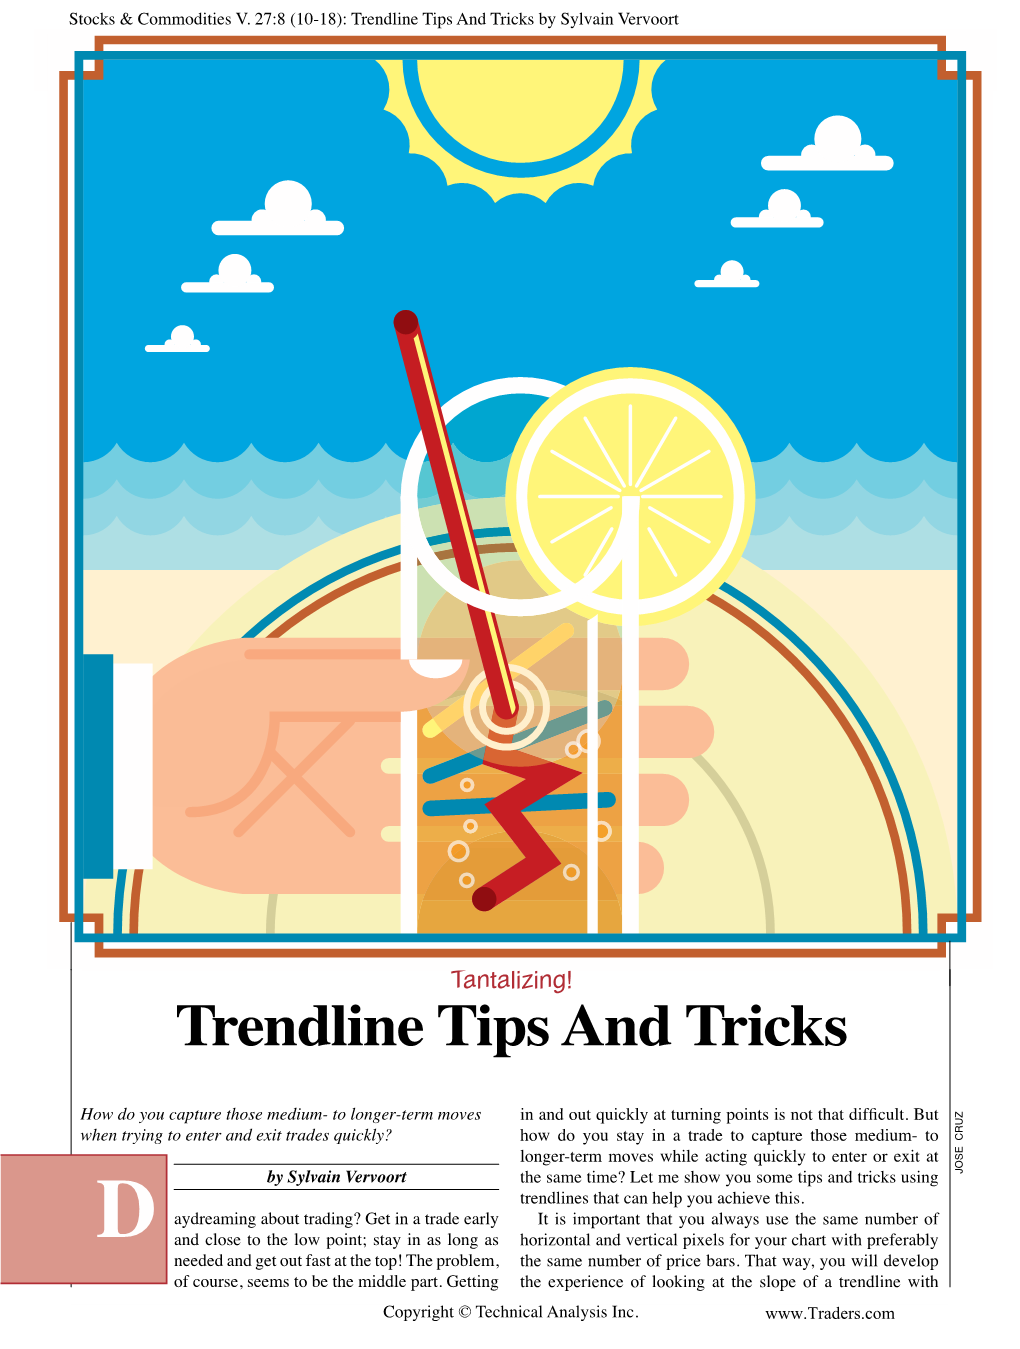 Trendline Tips and Tricks by Sylvain Vervoort